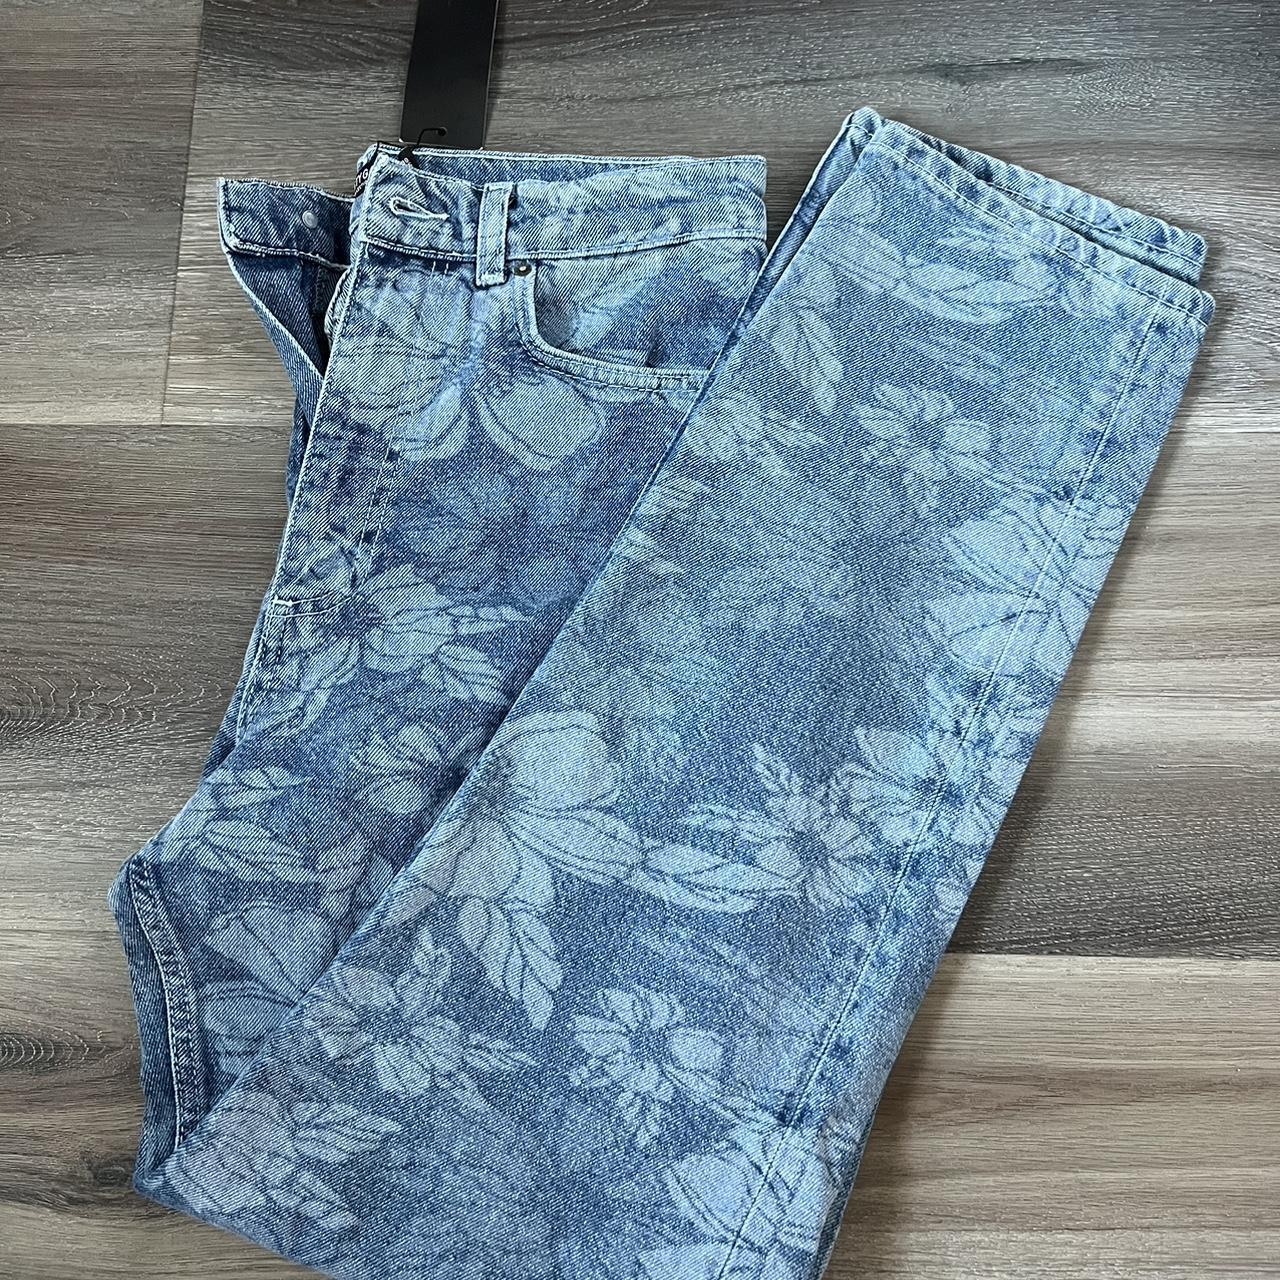 Nasty Gal Brand new Flower print jeans! - Depop